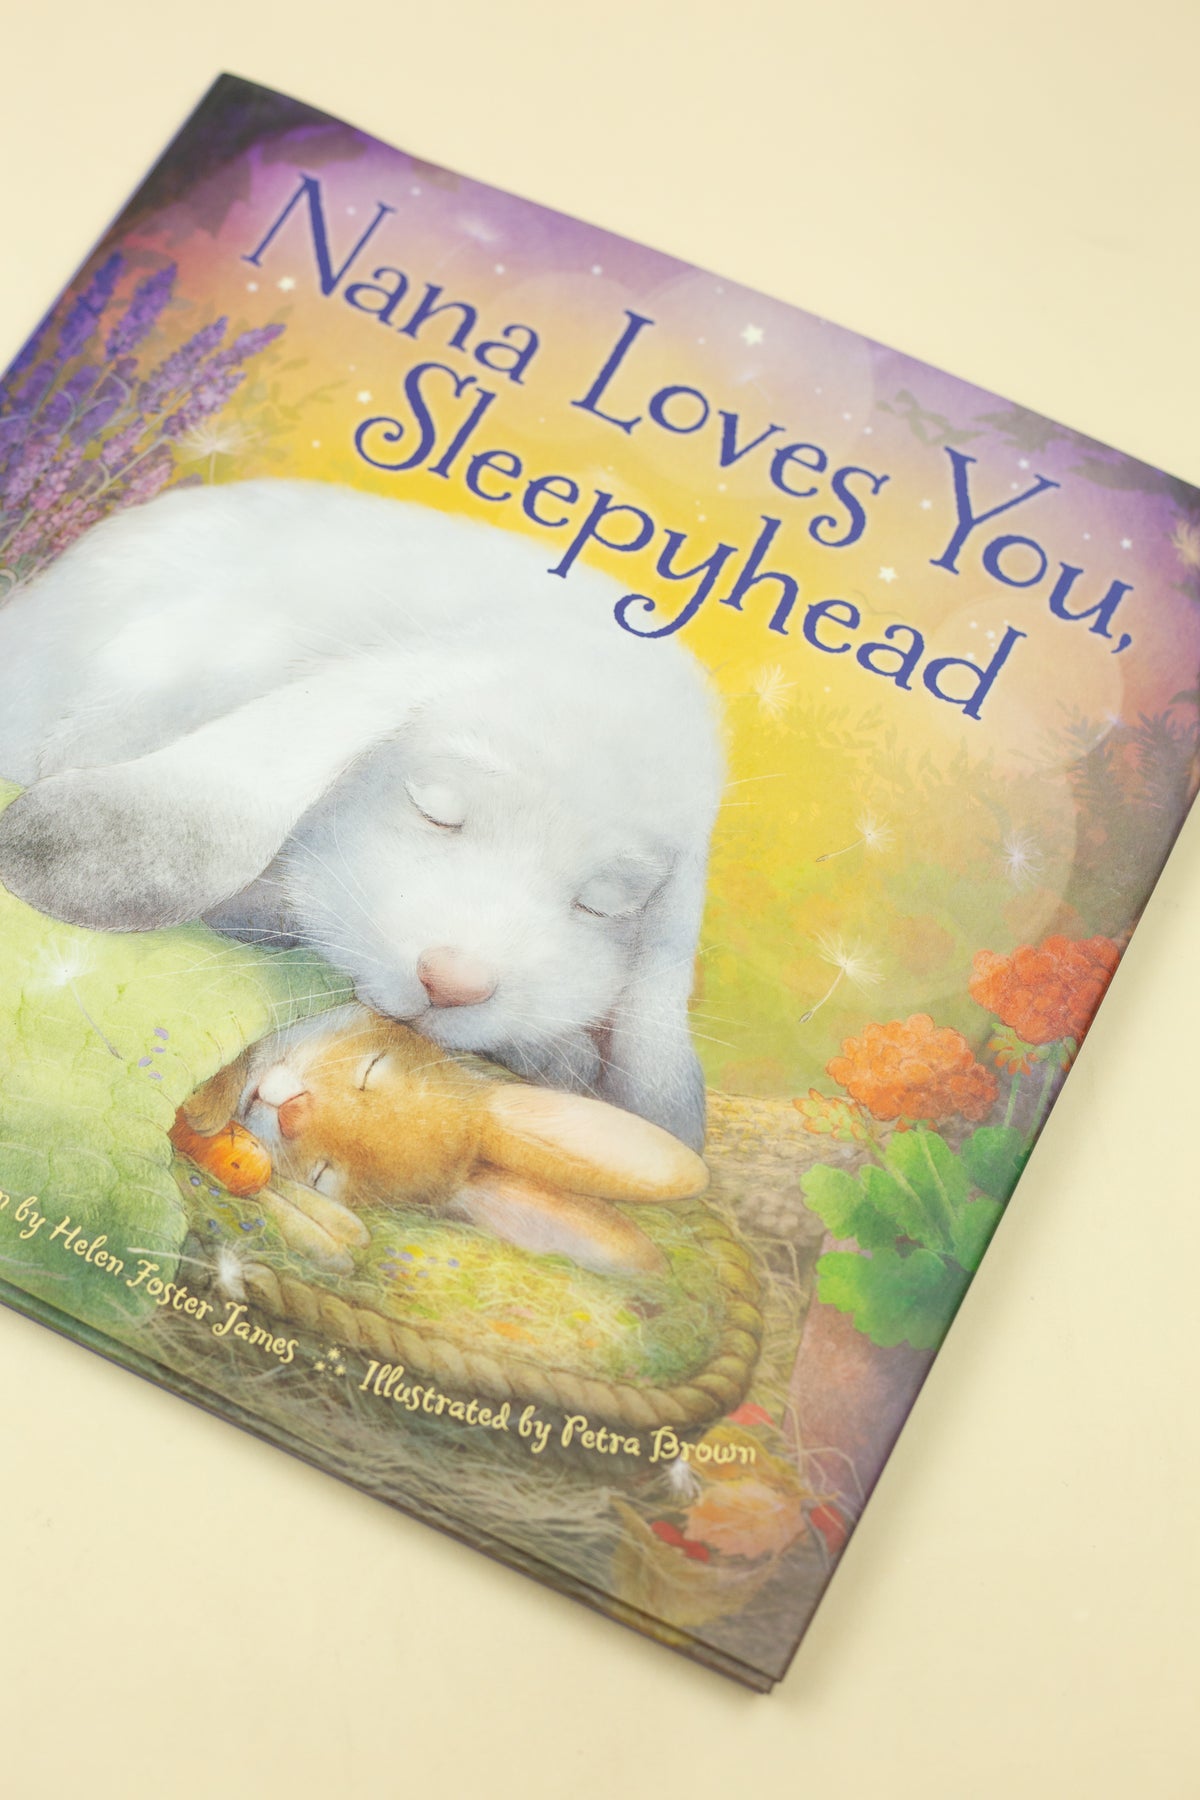 Nana Loves You, Sleepyhead Book